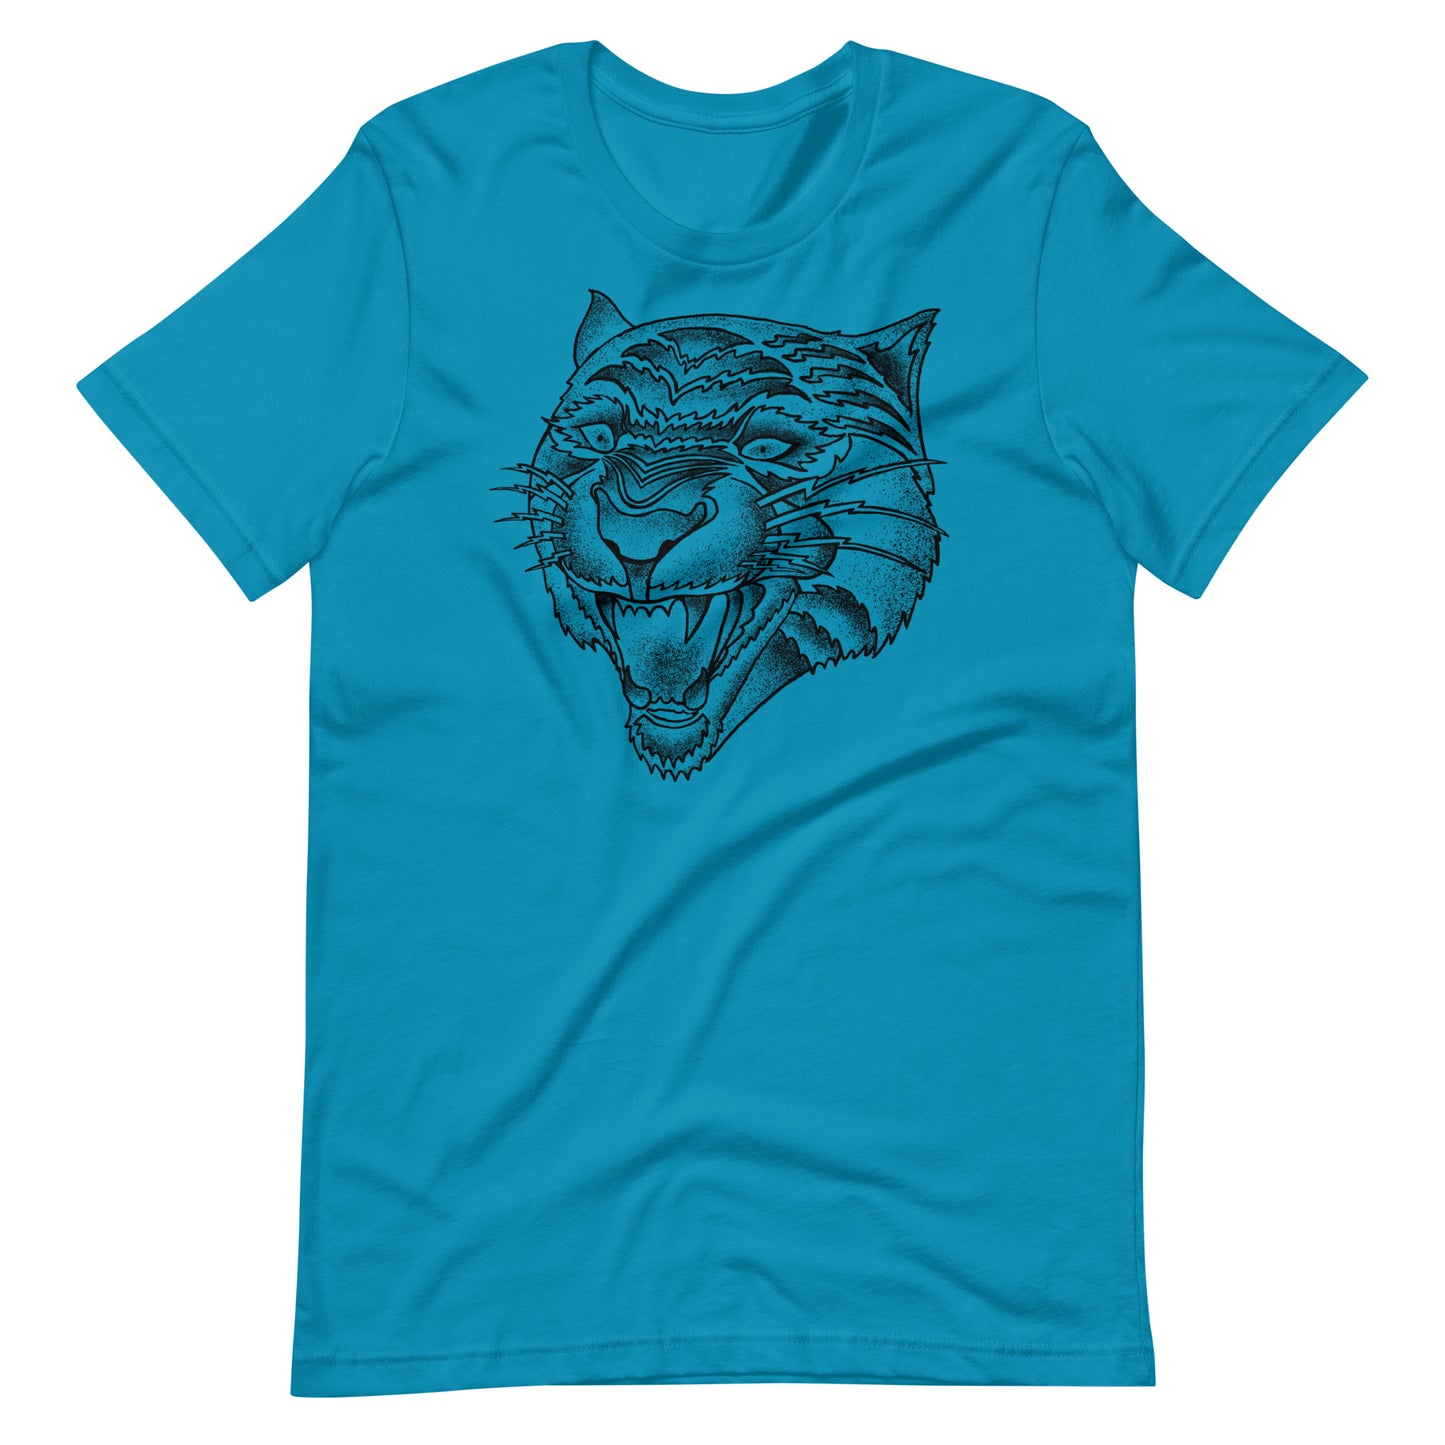 Panther Black - Men's t-shirt - Aqua Front